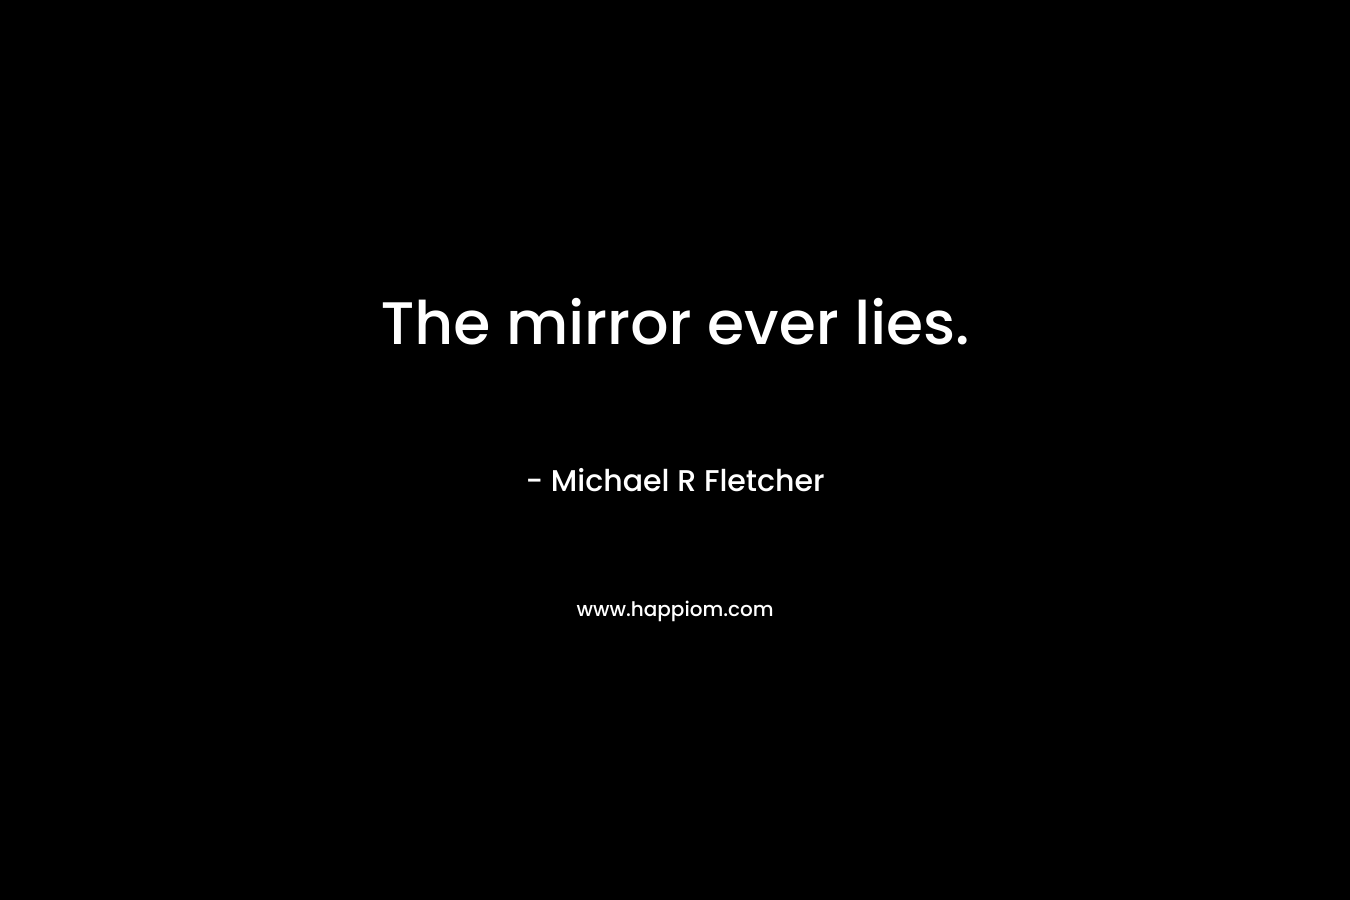 The mirror ever lies.